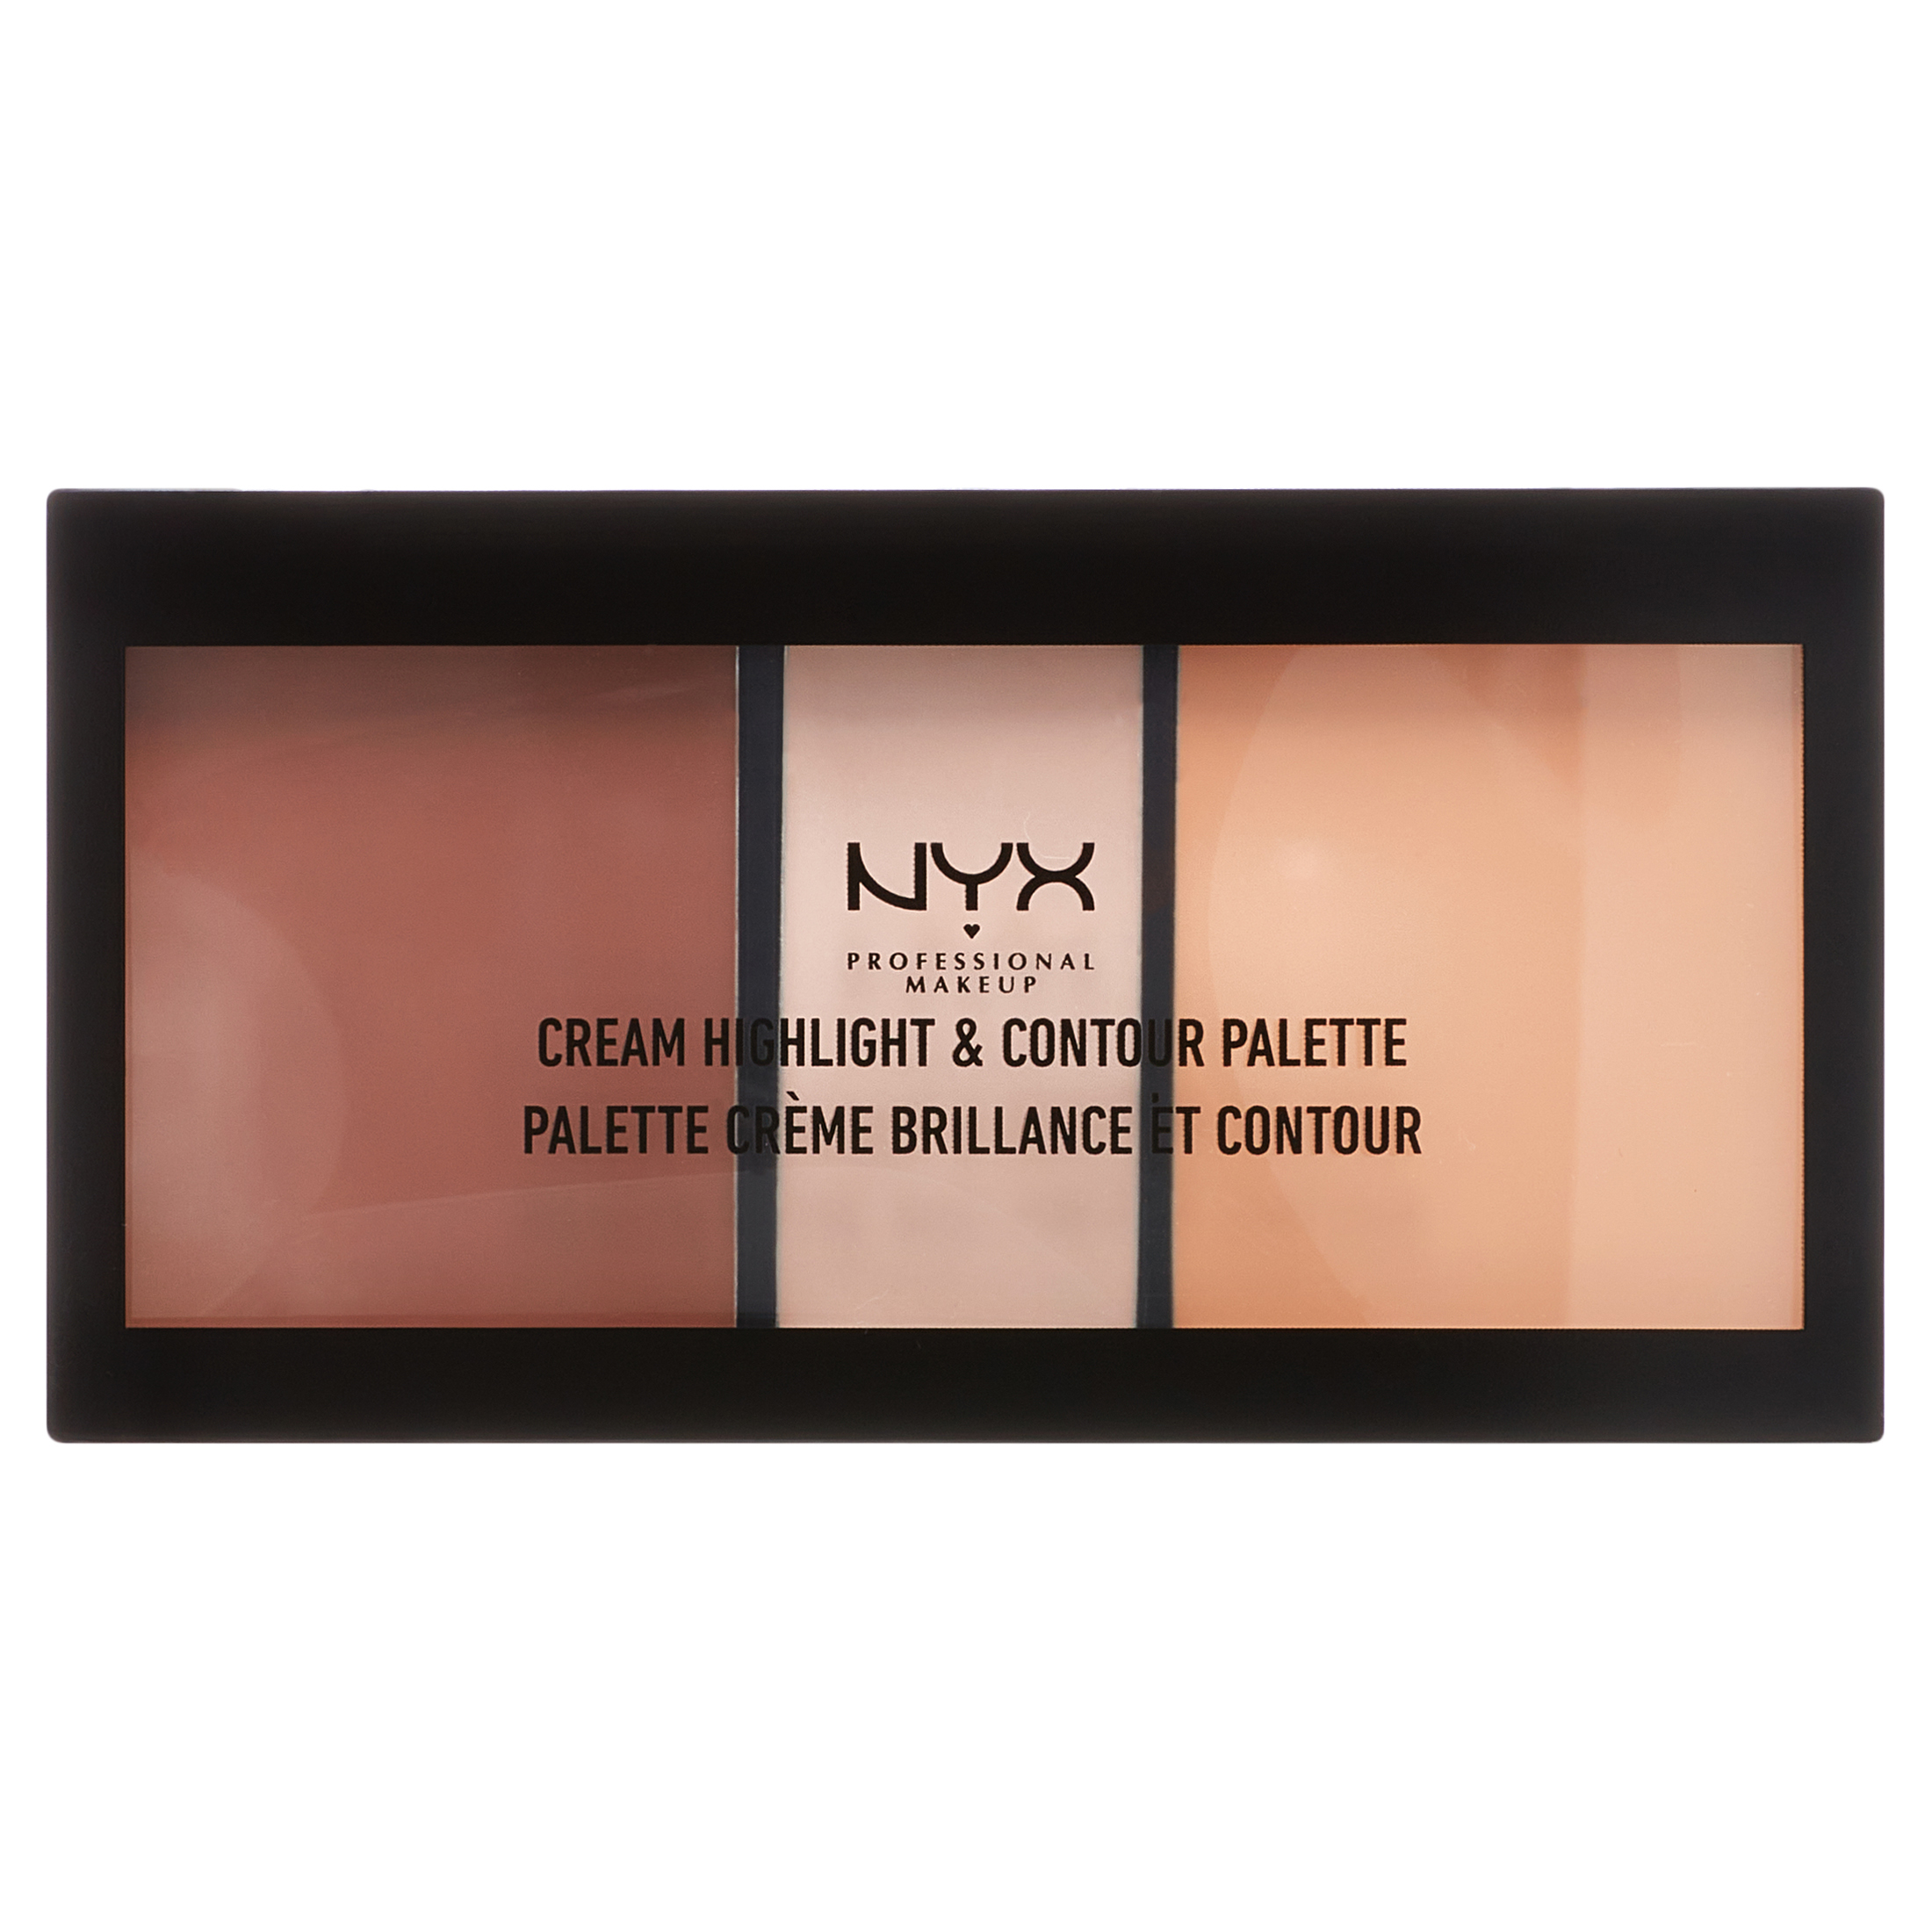 NYX Professional Makeup Cream Highlight & Contour Palette, Light - image 4 of 10